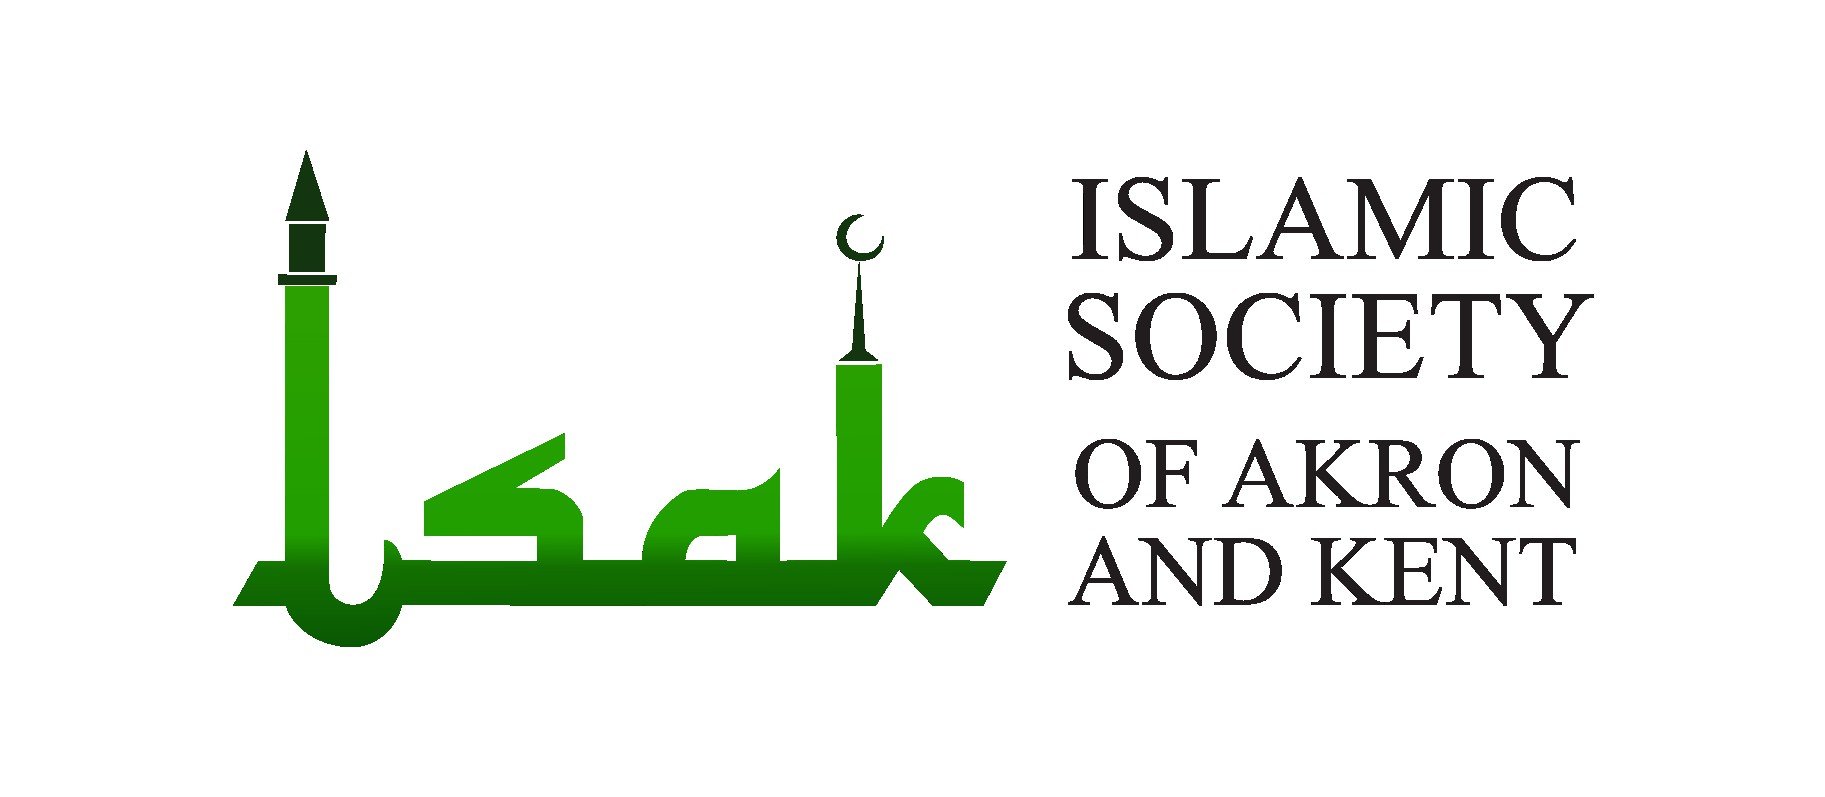 Islamic Society of Akron and Kent logo